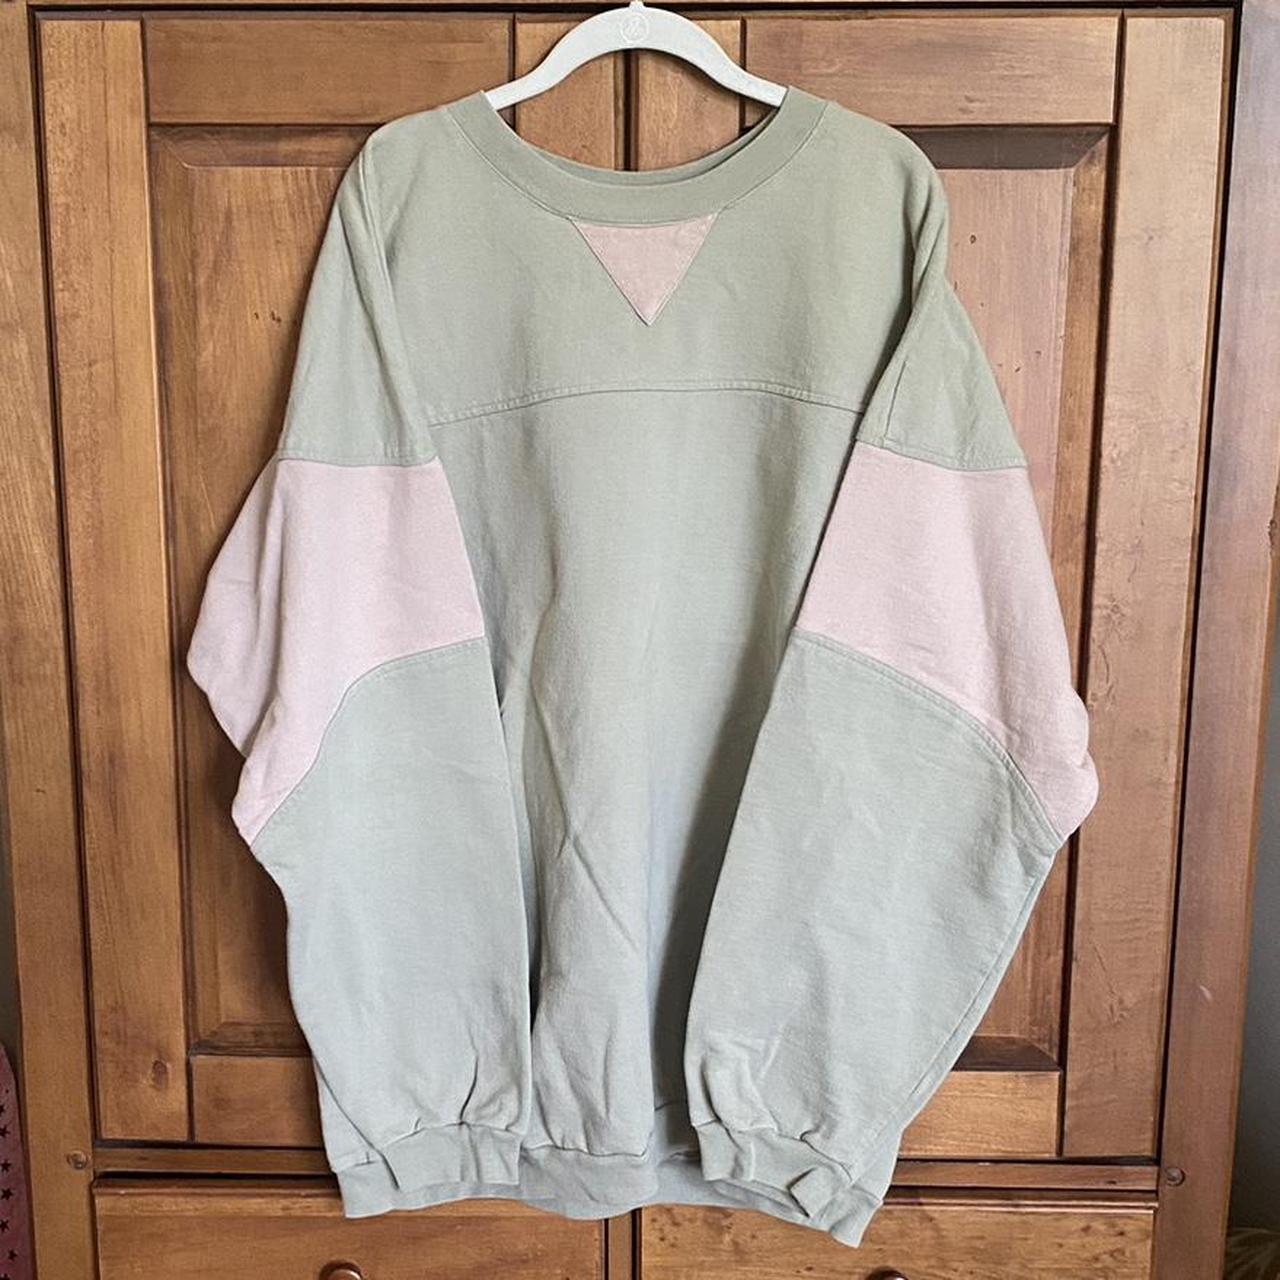 Vintage oversized sweatshirt Chicos, labeled size 2 - Depop